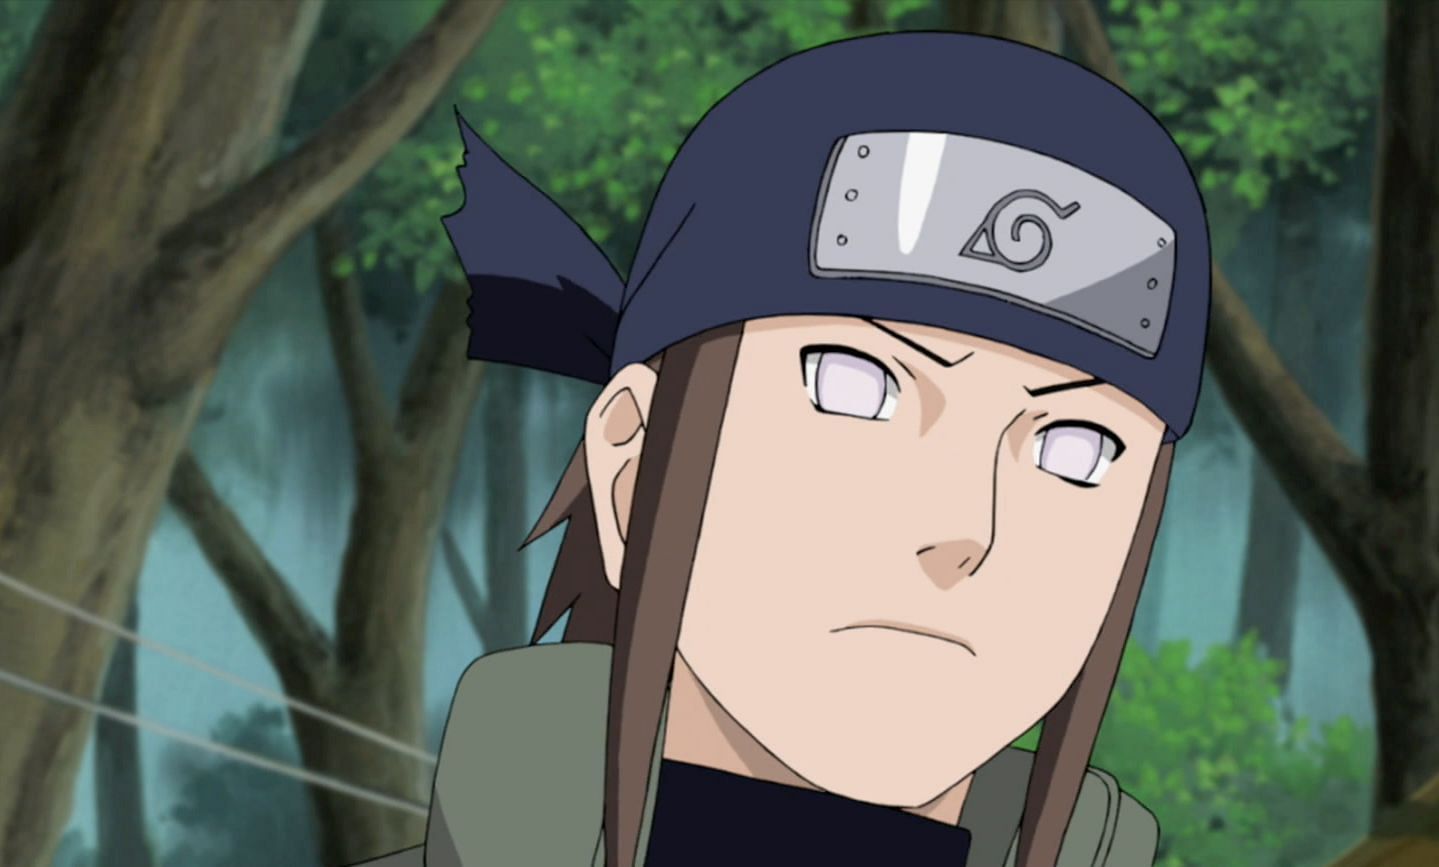 Tokuma Hyuga, as seen in the anime Naruto (Image via Studio Pierrot)